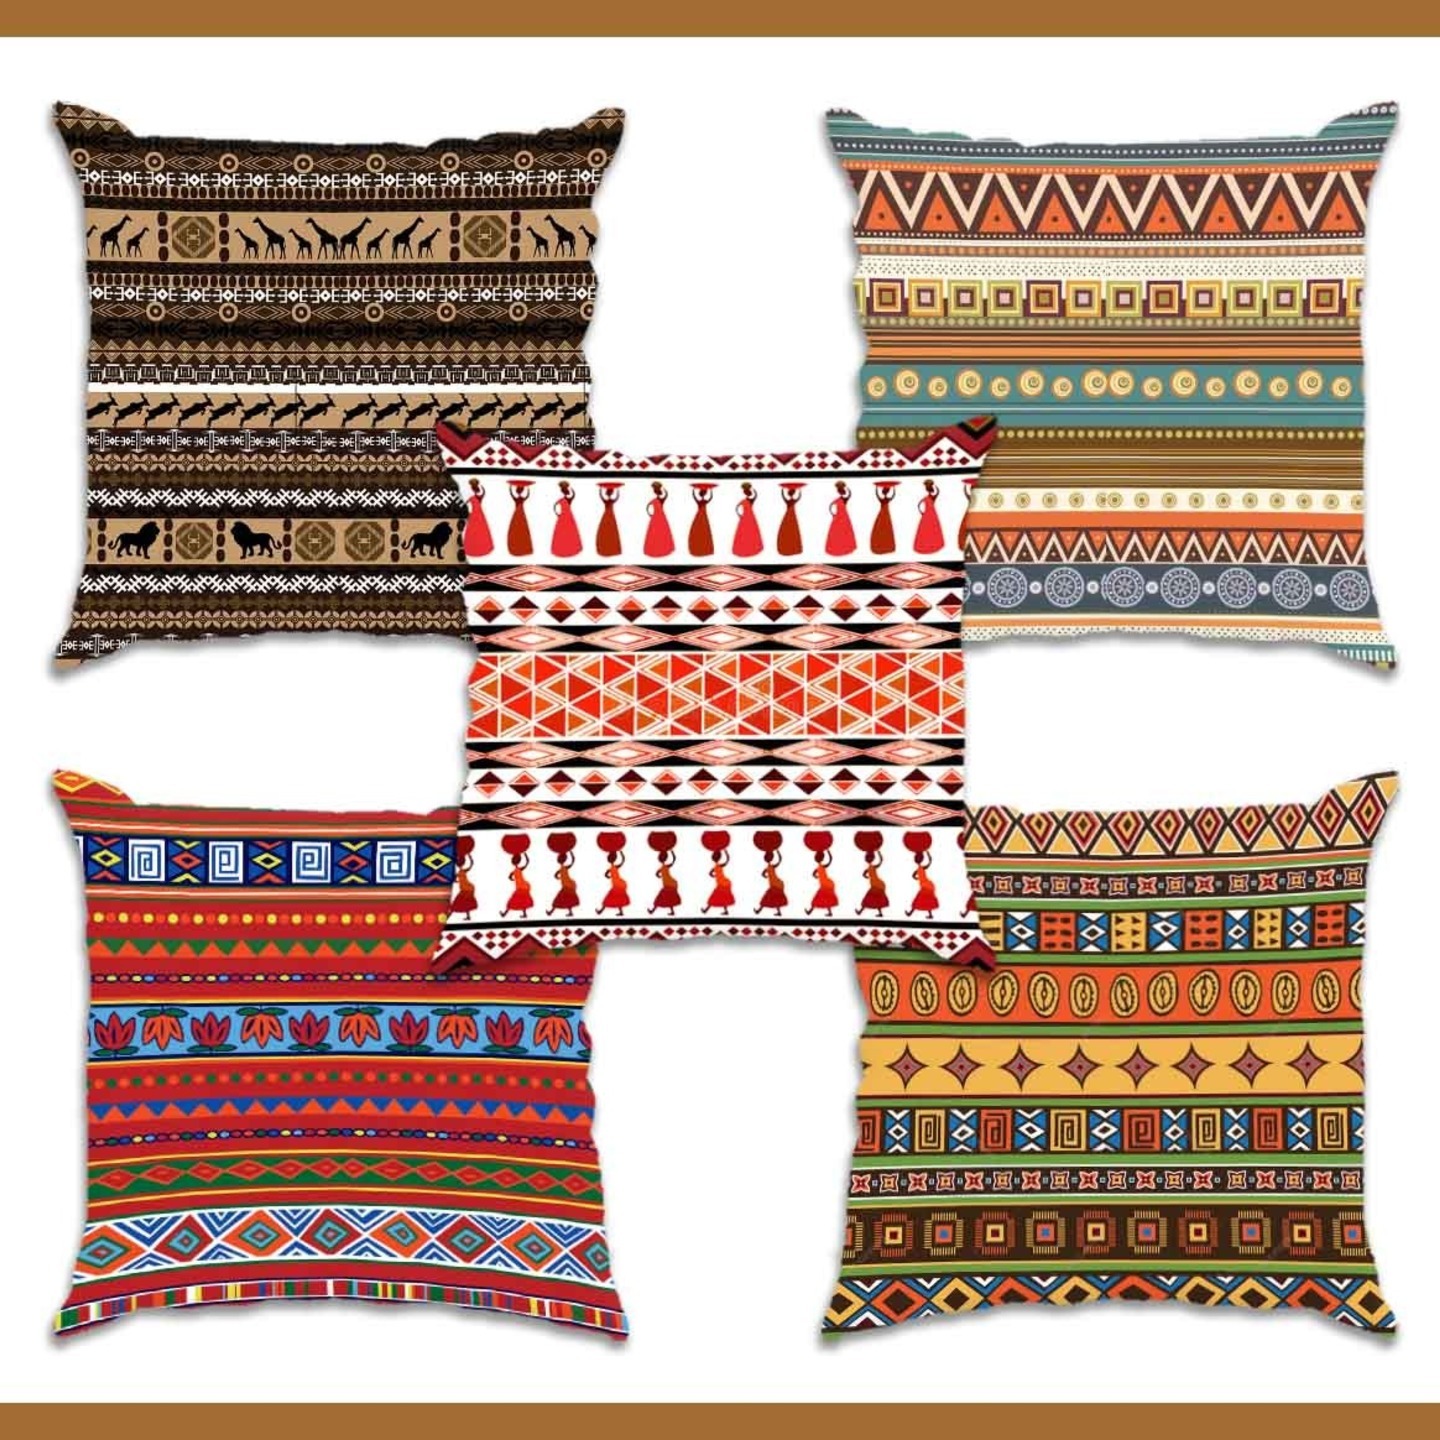 Handtex Home Jute Fabric Printed Cushion Covers, Set of 5, 16 x 16 inch 40.6 x 40.6 cm